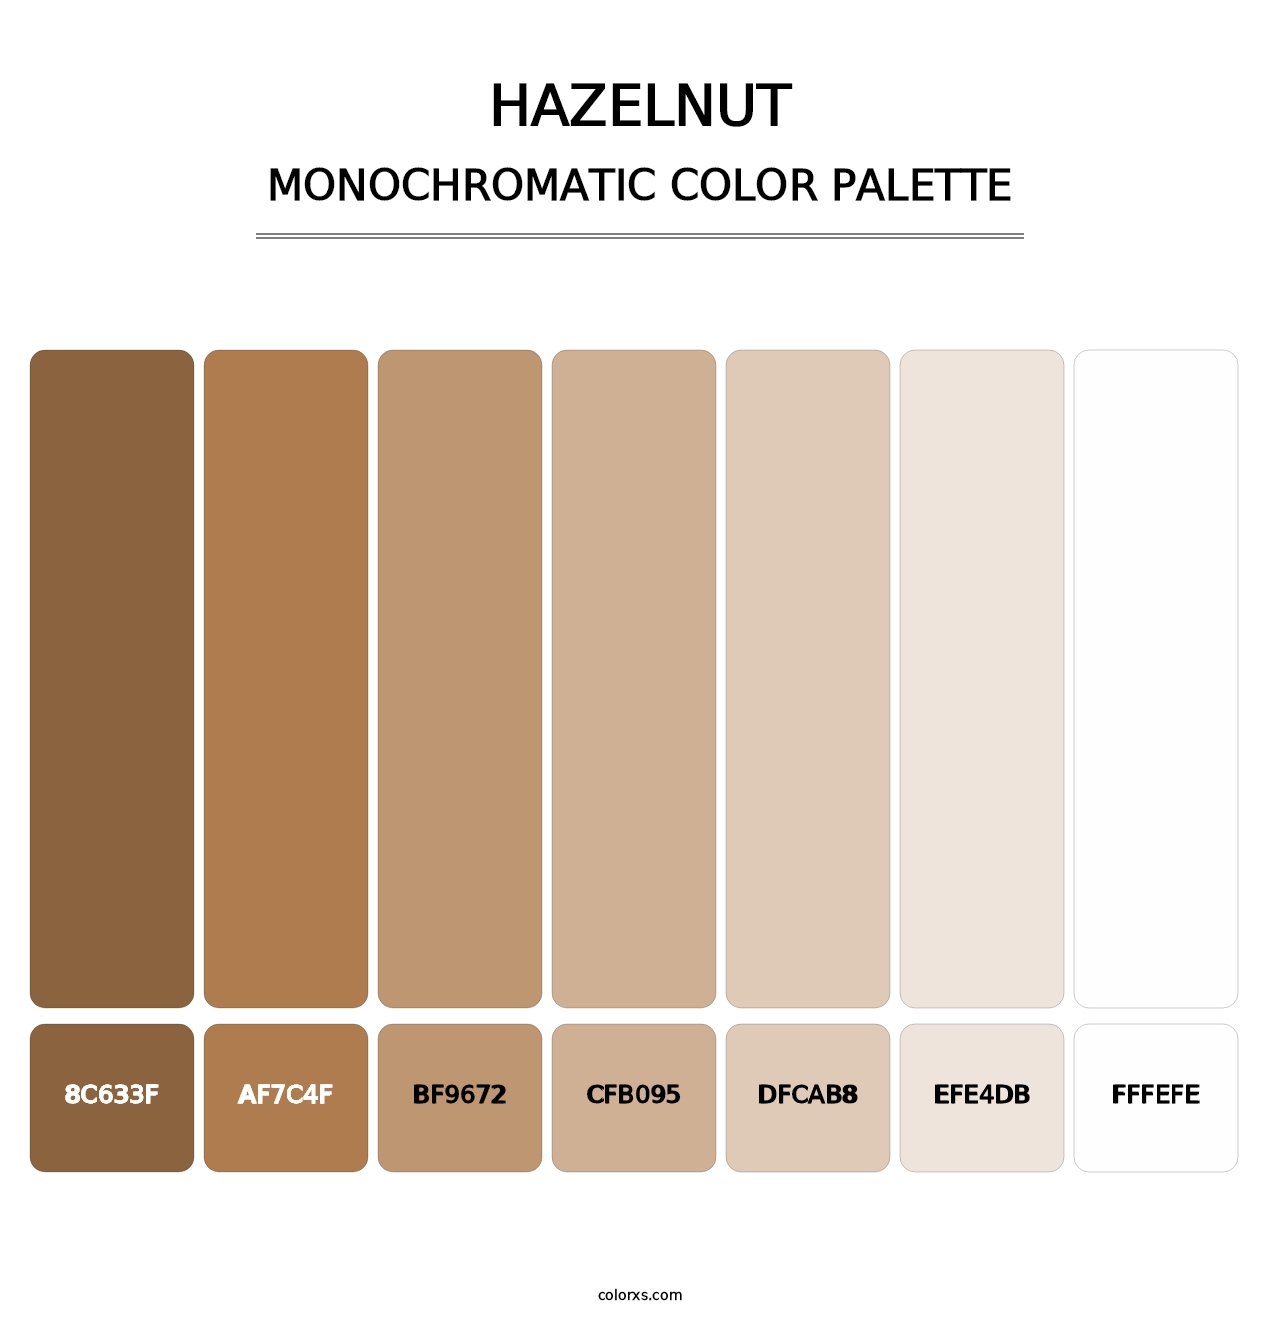 Hazelnut - Monochromatic Color Palette